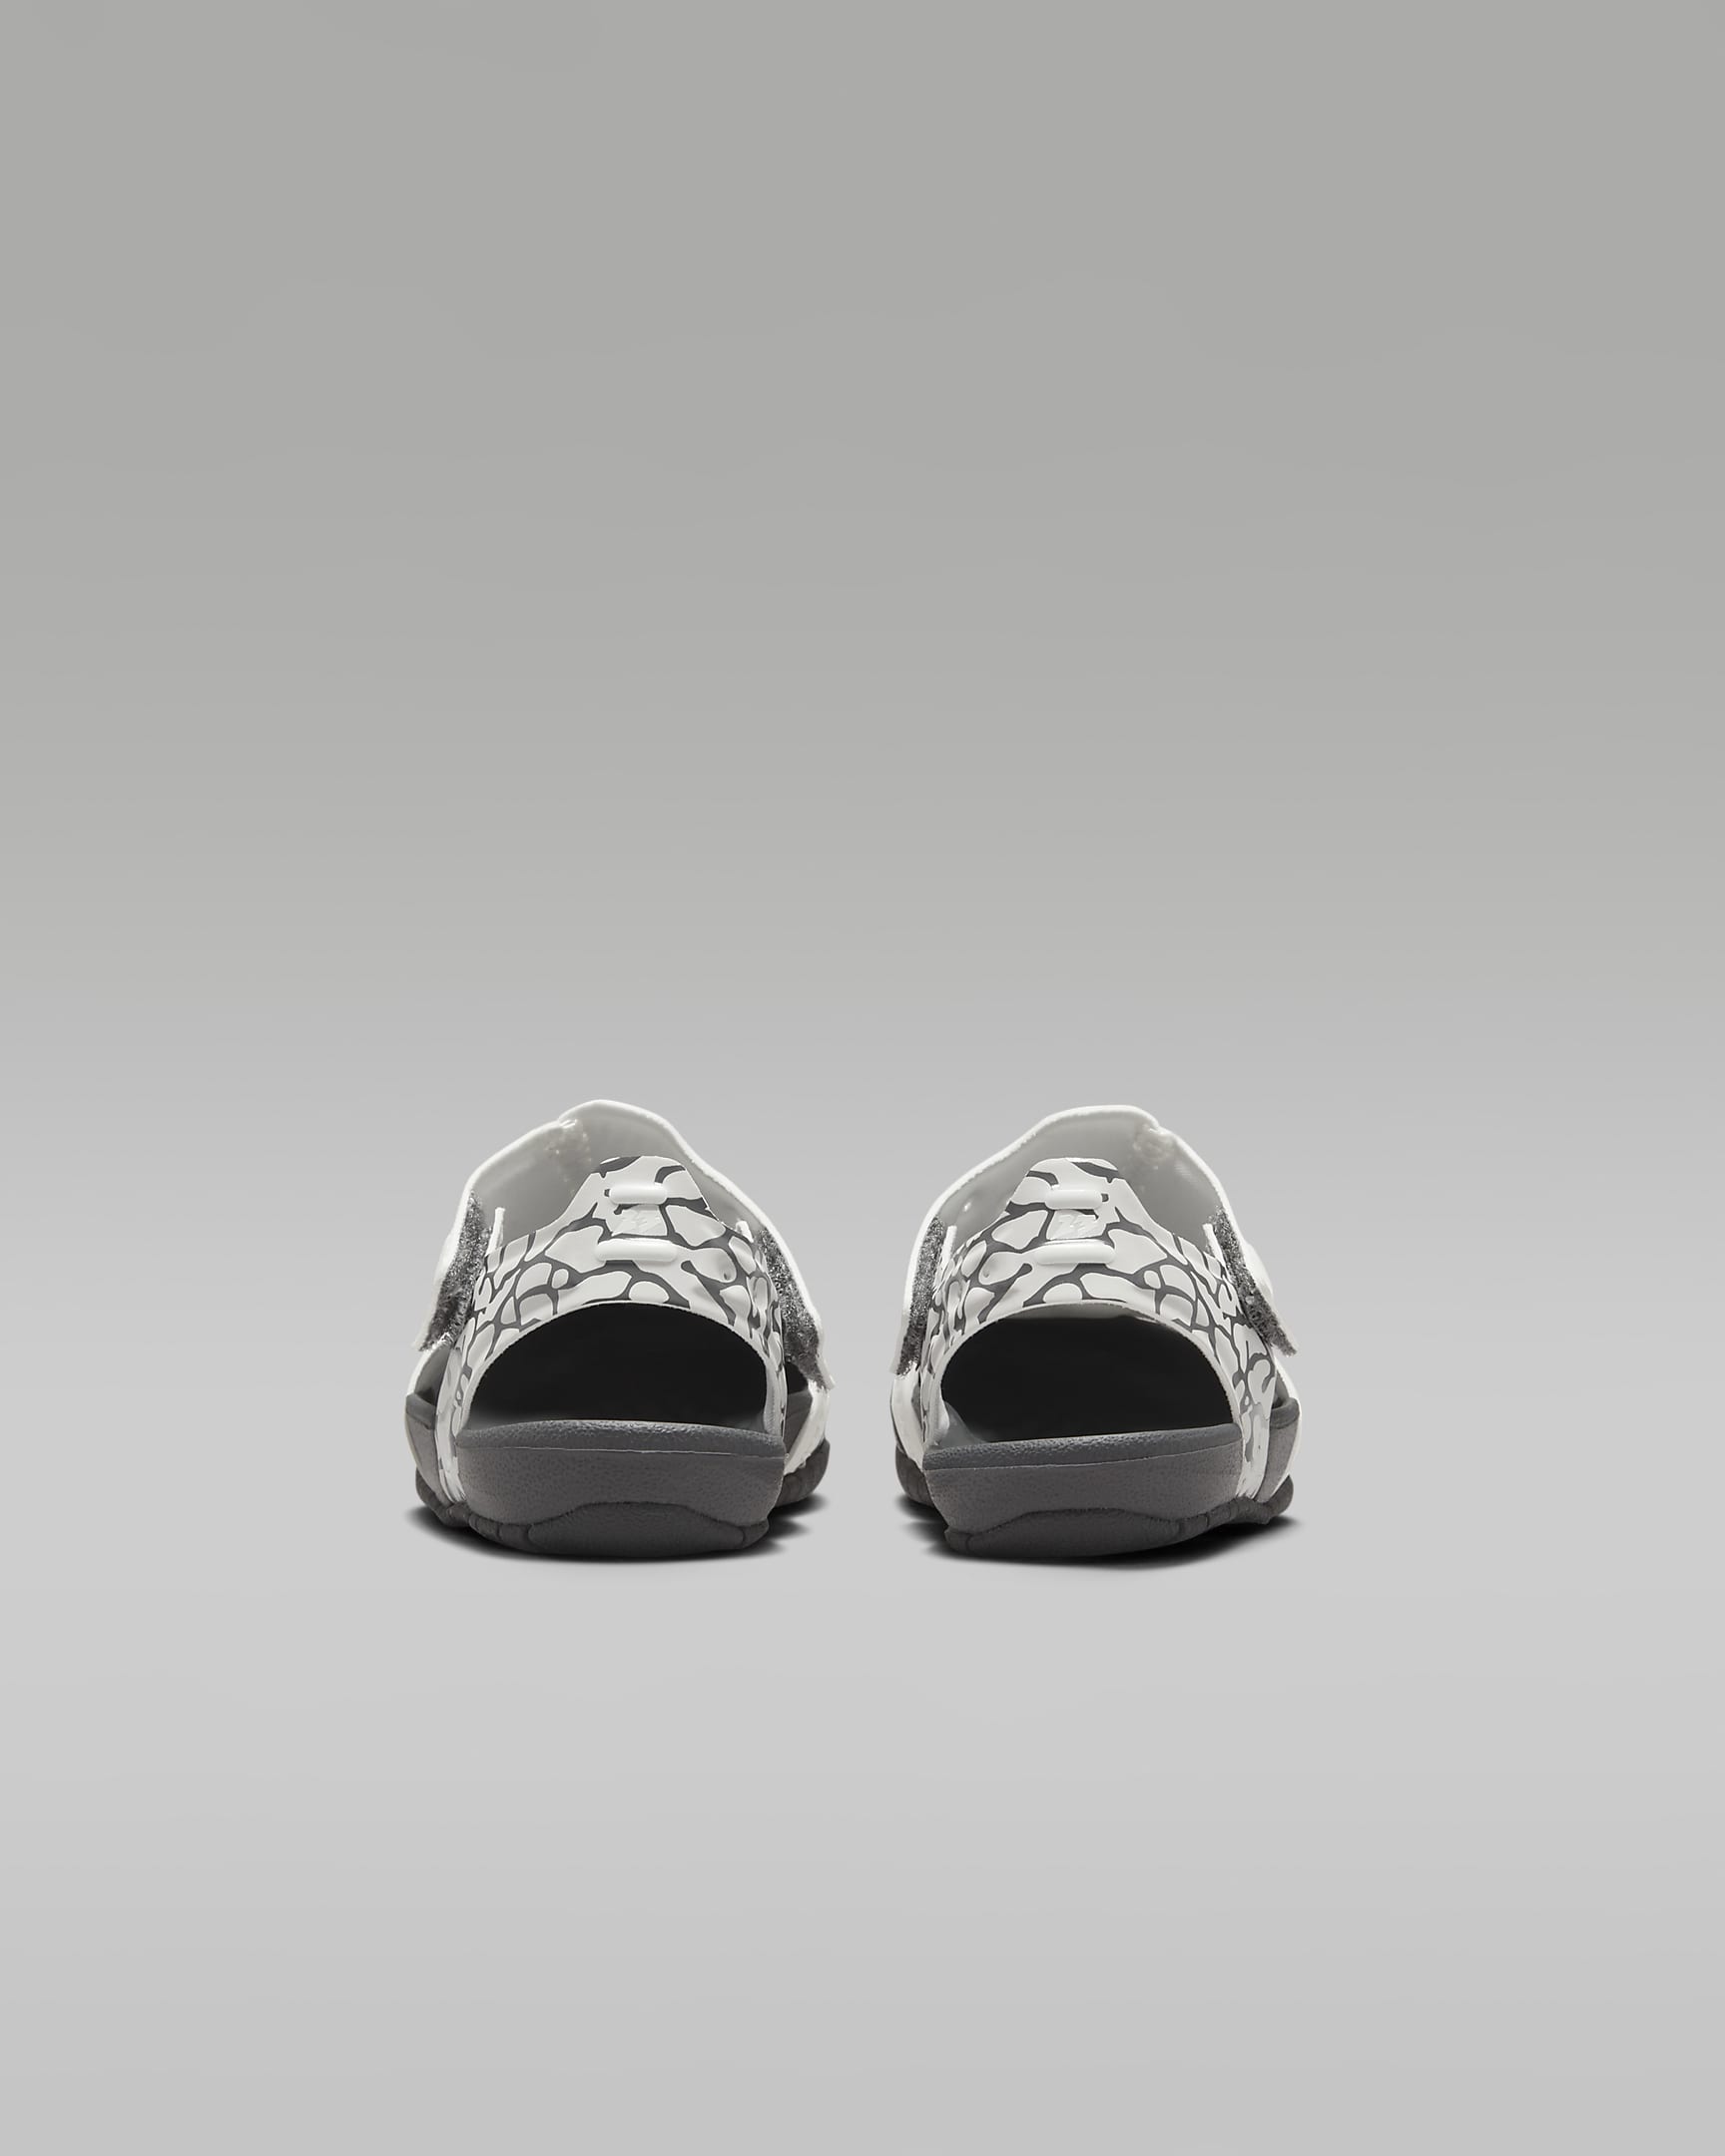 Jordan Flare Baby and Toddler Shoe - Sail/Iron Grey/Light Ash Grey/Black